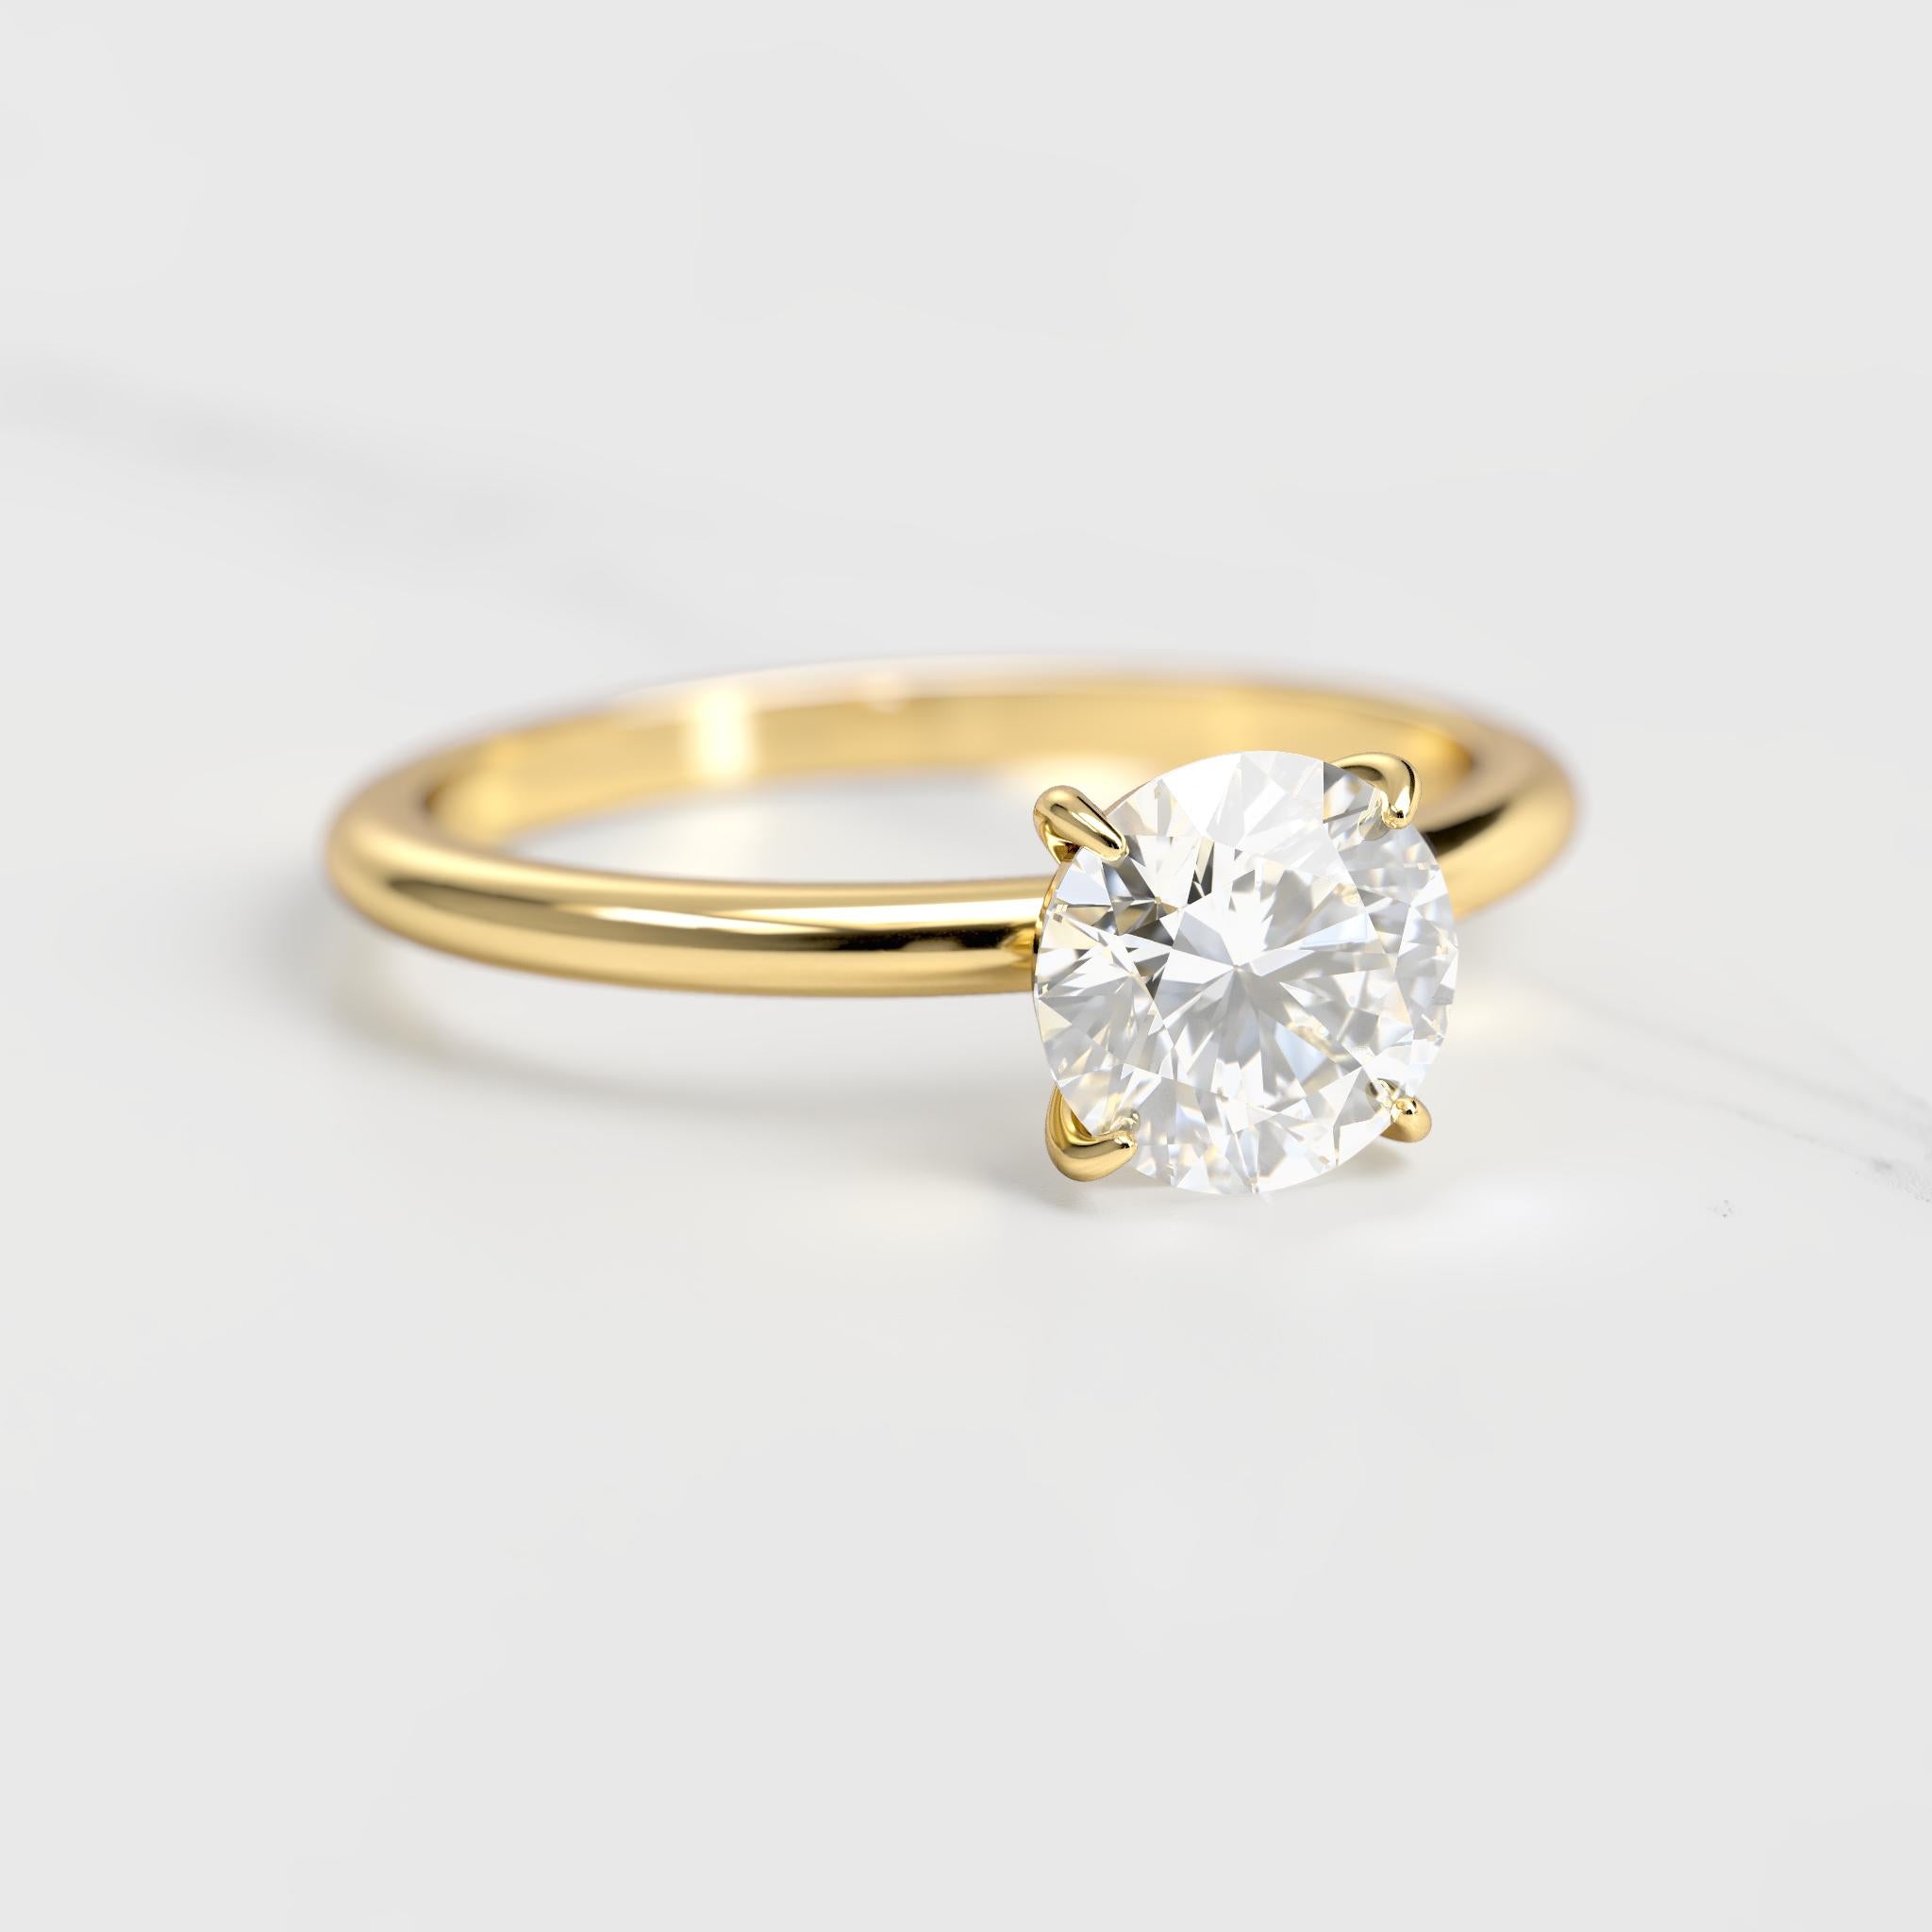 Round Tapered Solitaire Diamond Ring - 14k yellow gold / 0.75ct / natural diamond